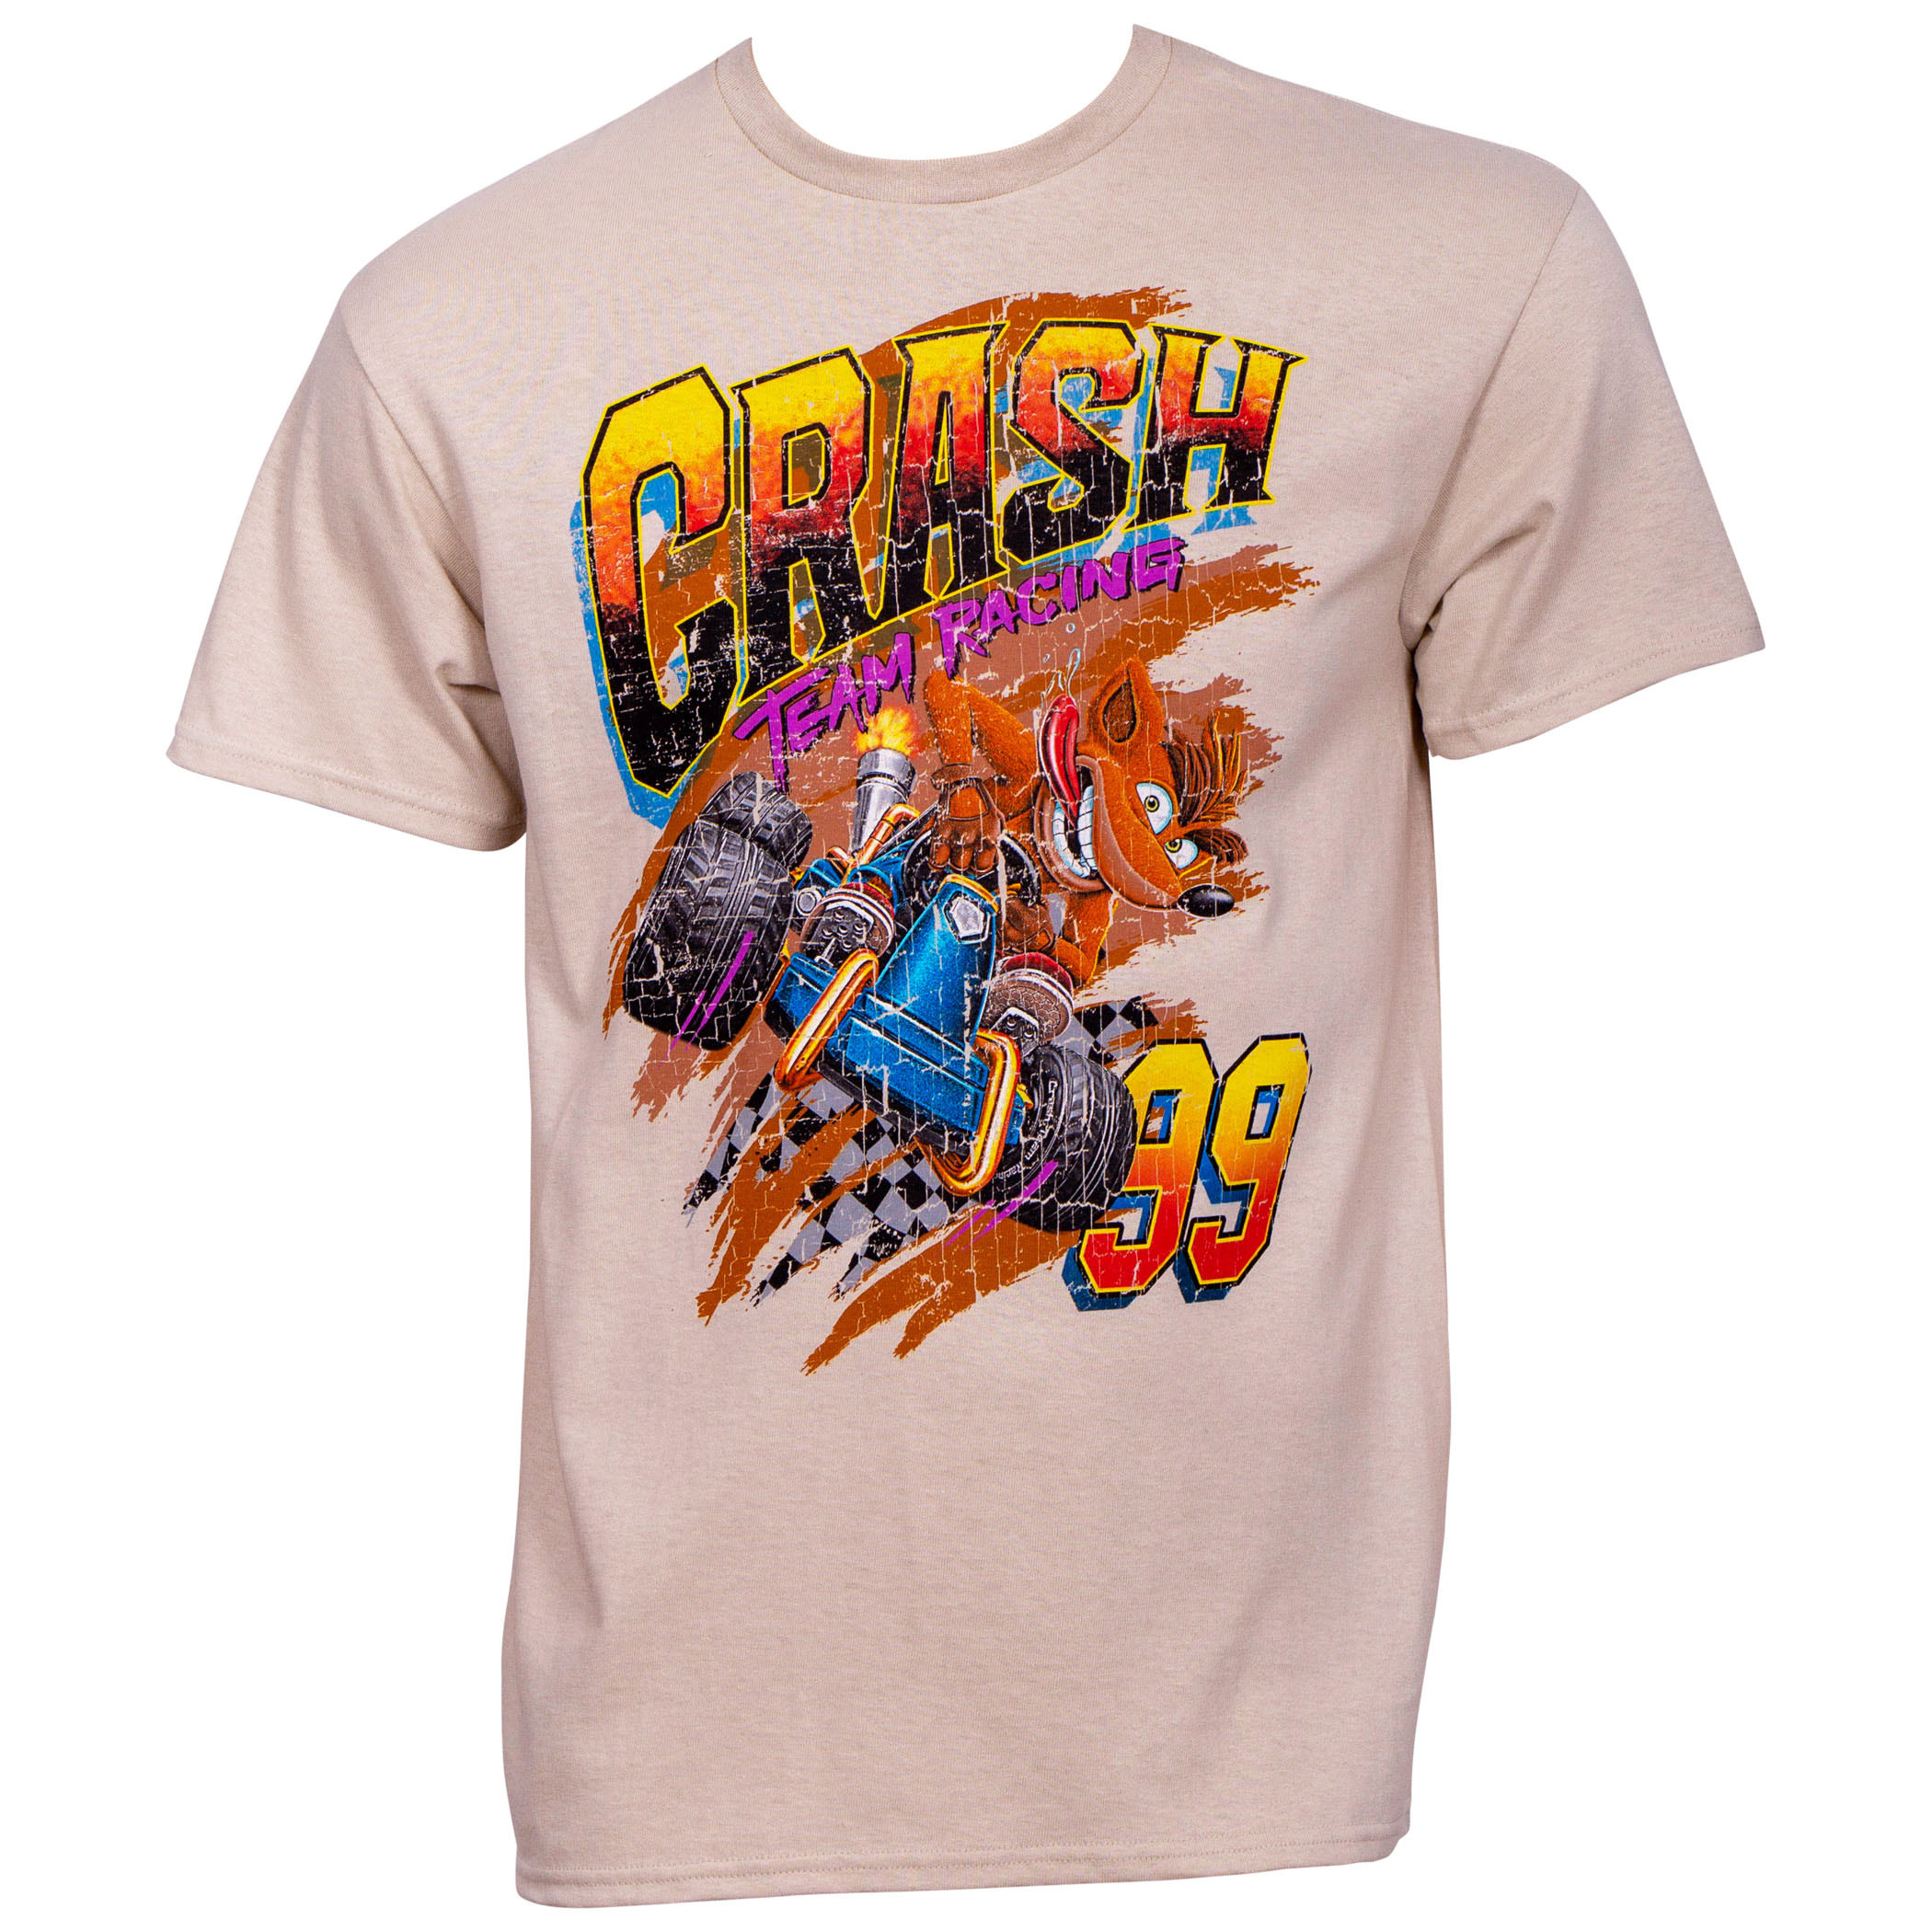 crash bandicoot shirt